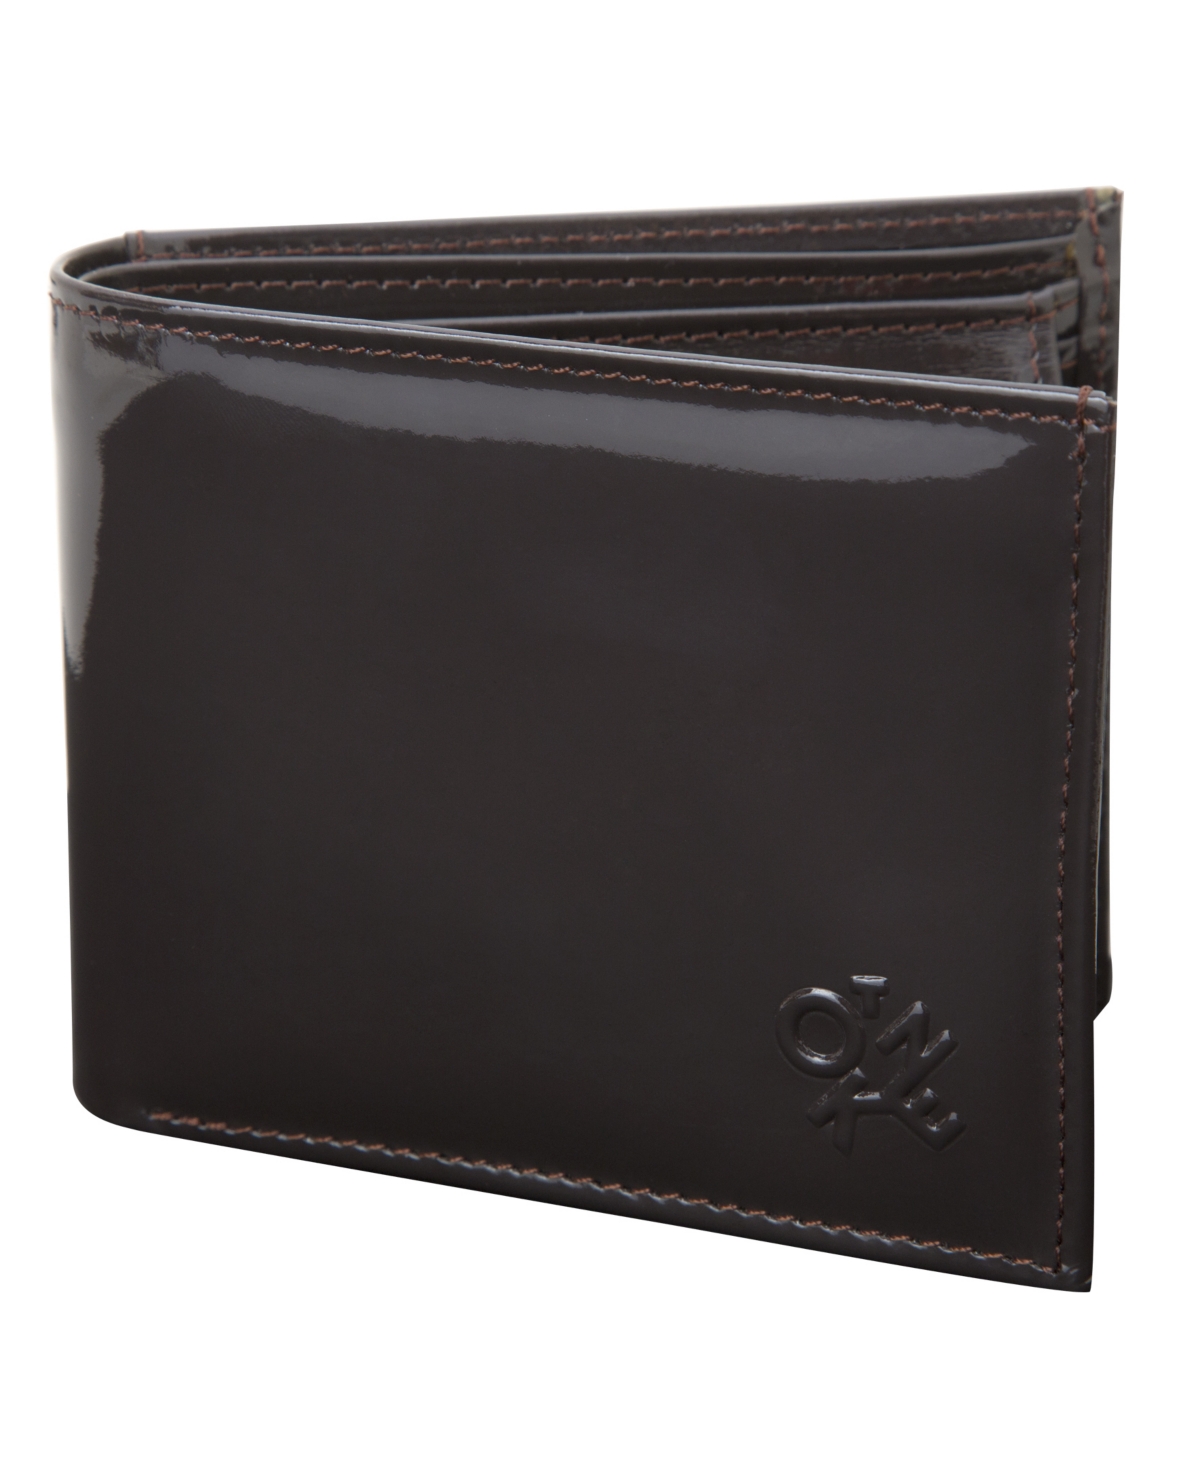 West End Leather Wallet - Dark Brown